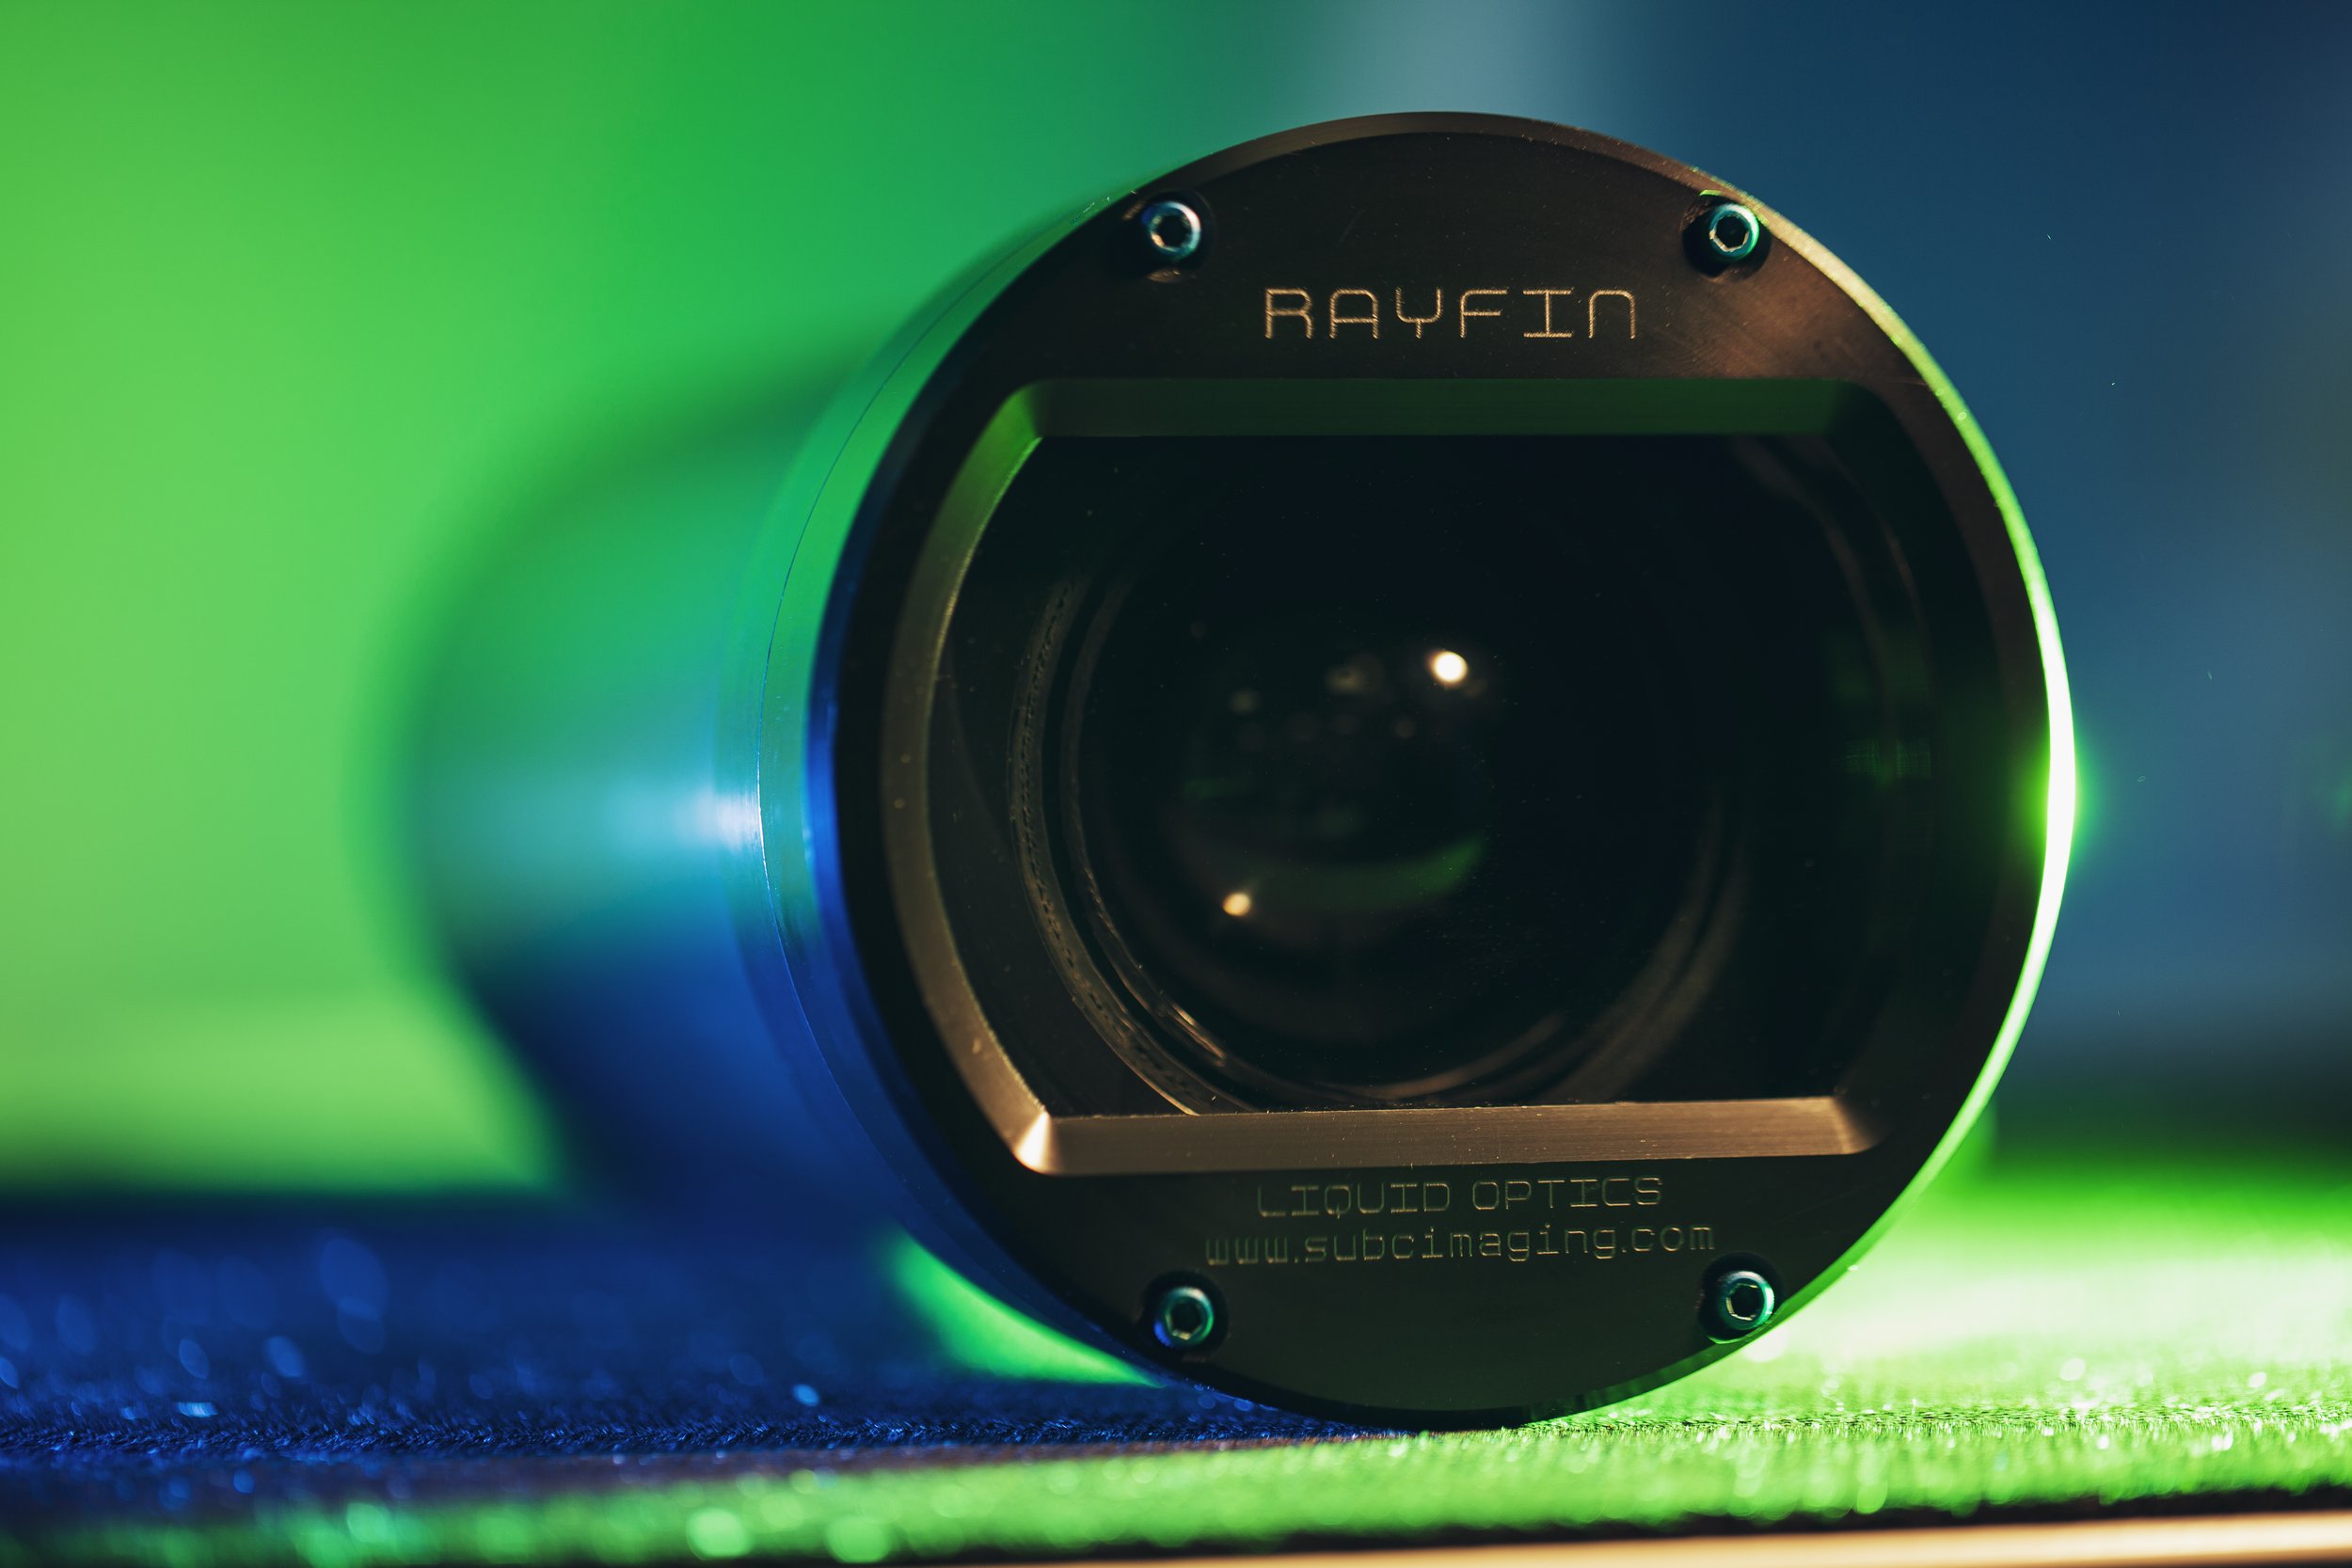 SubC Imaging's Rayfin subsea camera